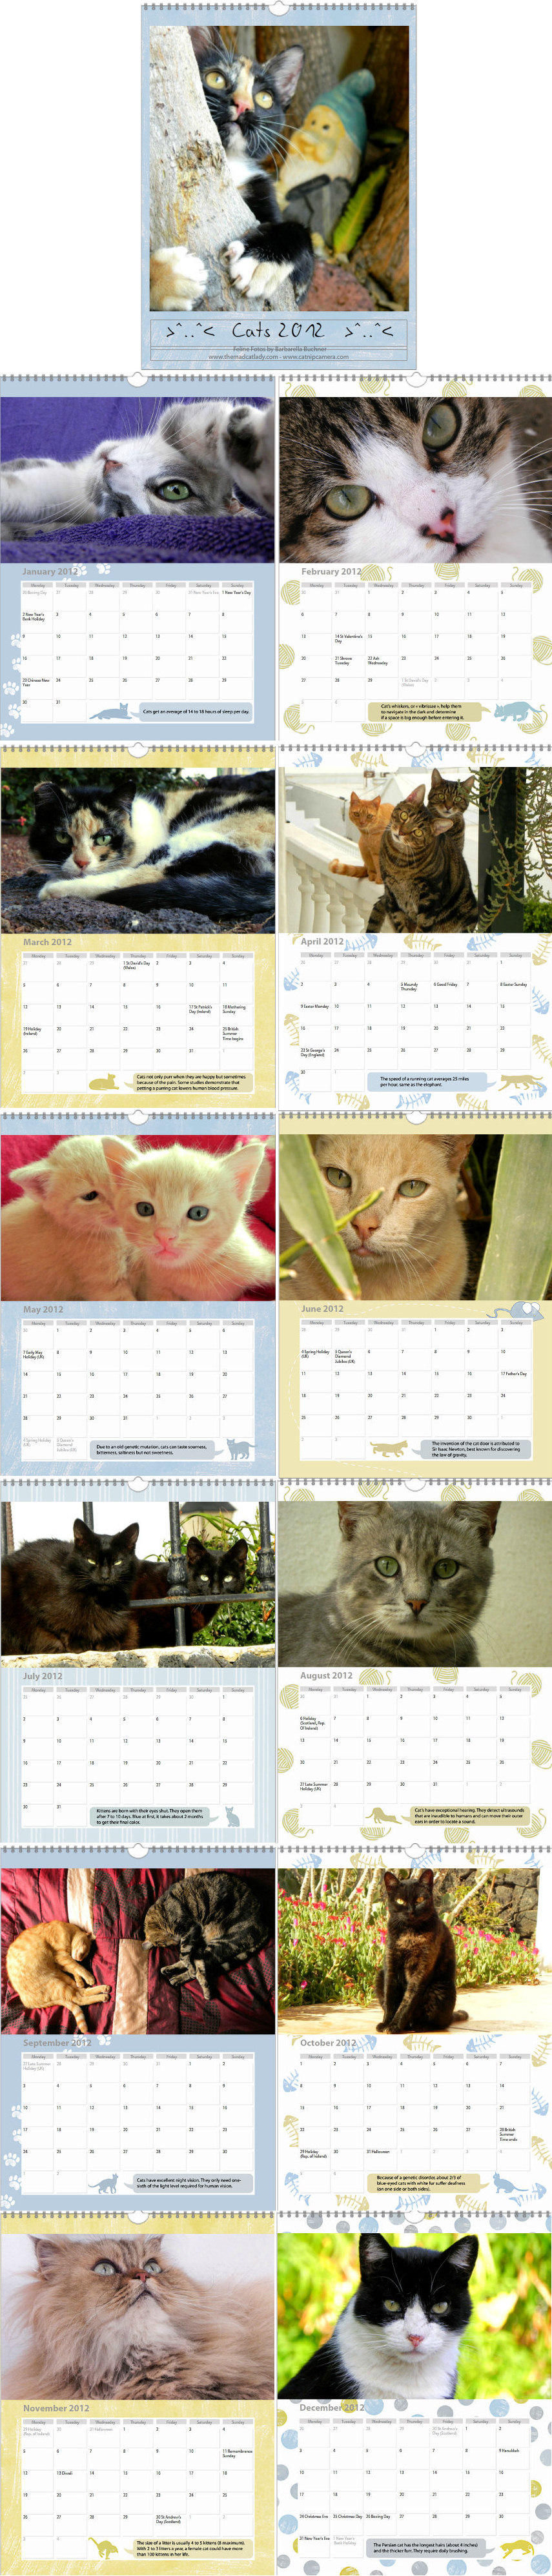 My 2012 Cat Photo Calendar